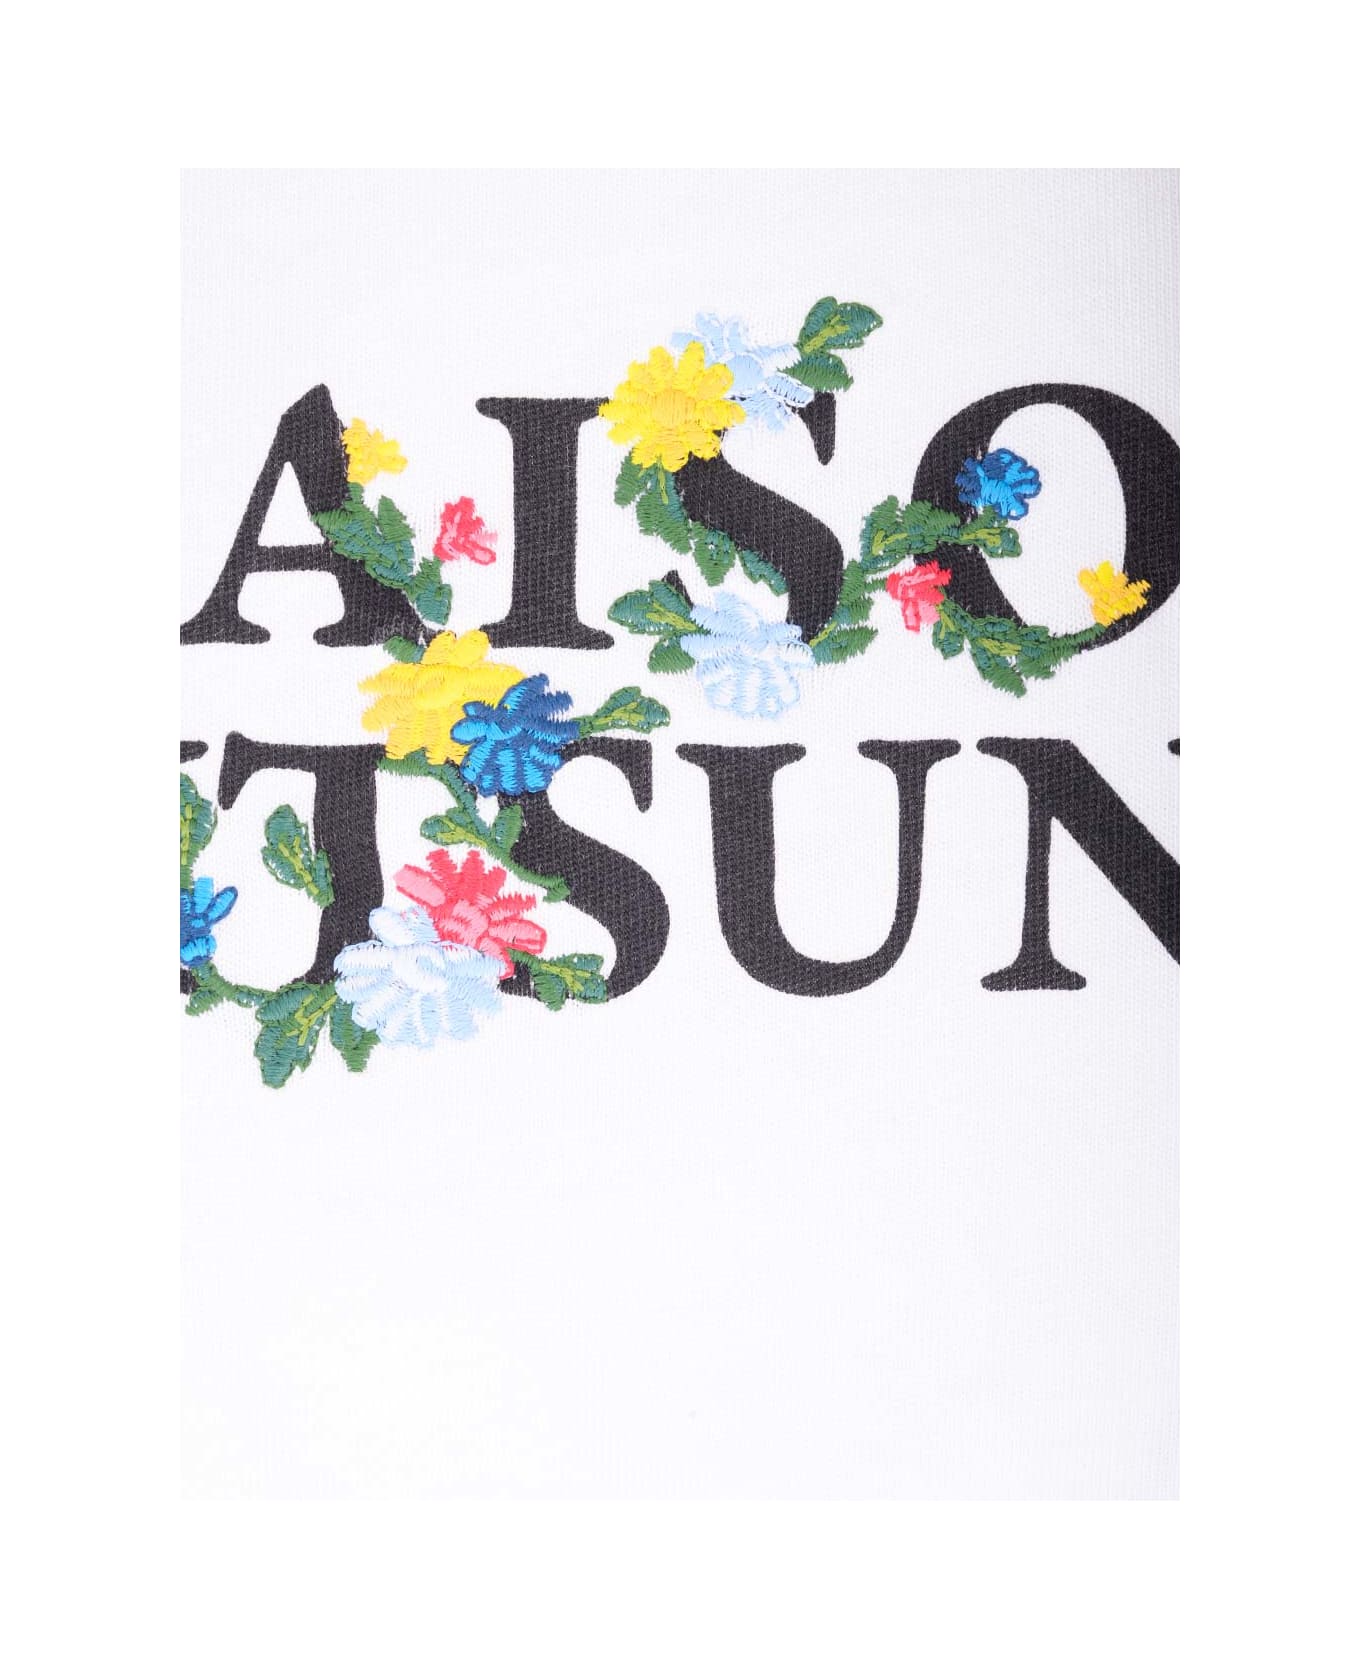 Maison Kitsuné Flowers Embroidery T-shirt - White